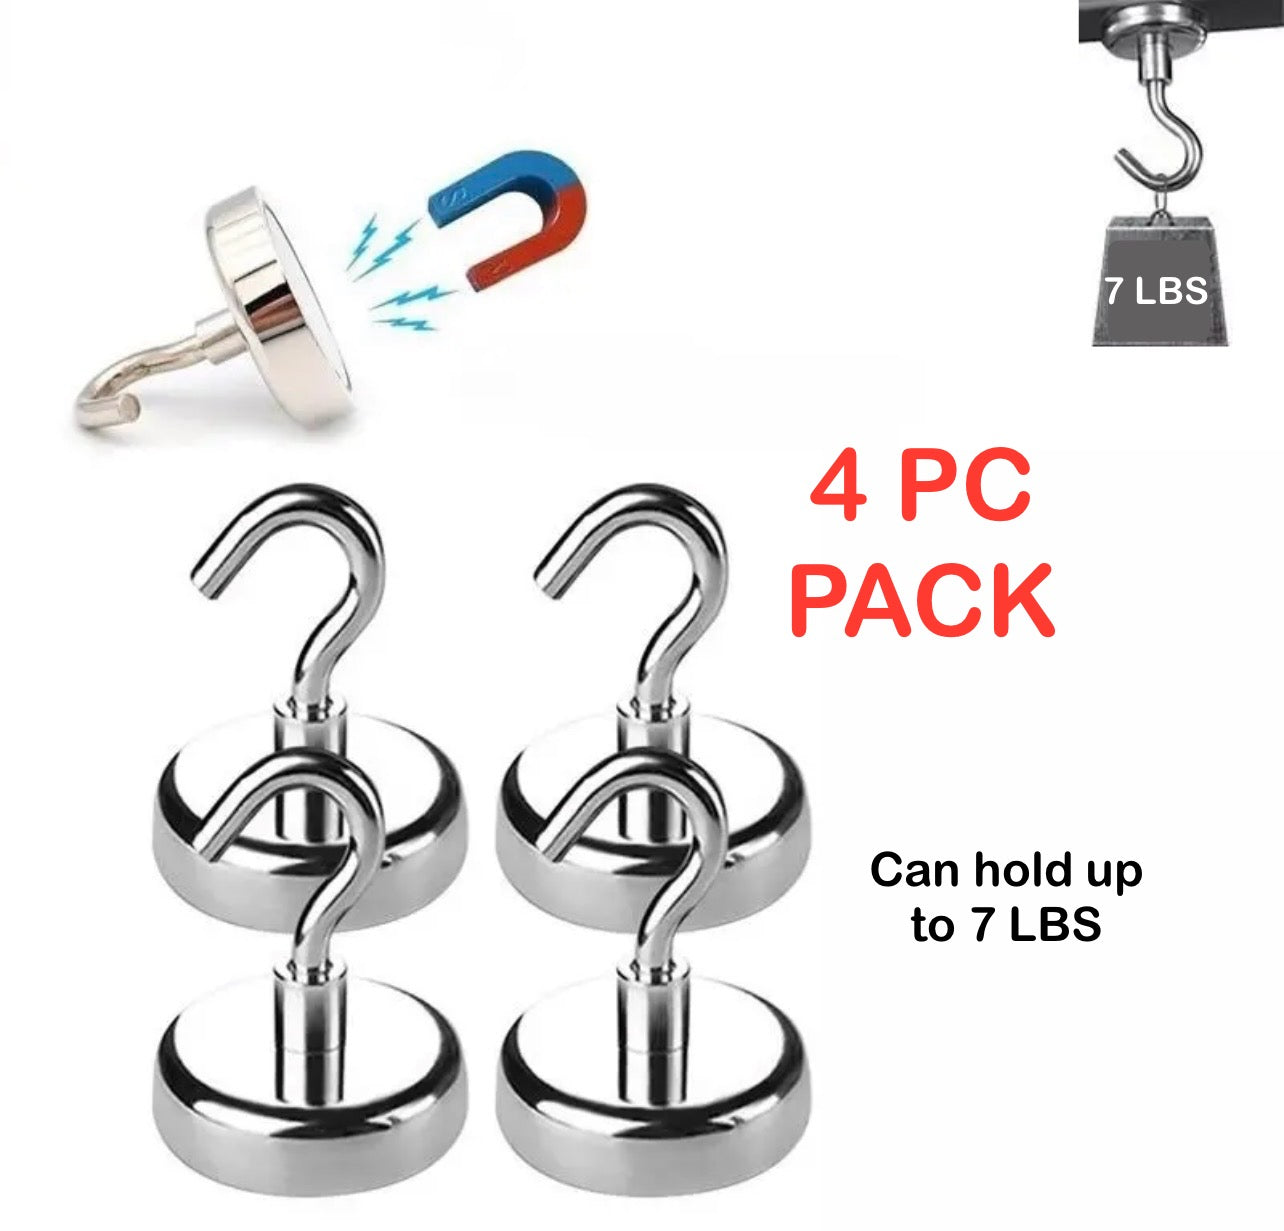 Magnet Hooks 7LBS - 4 Pc Pack